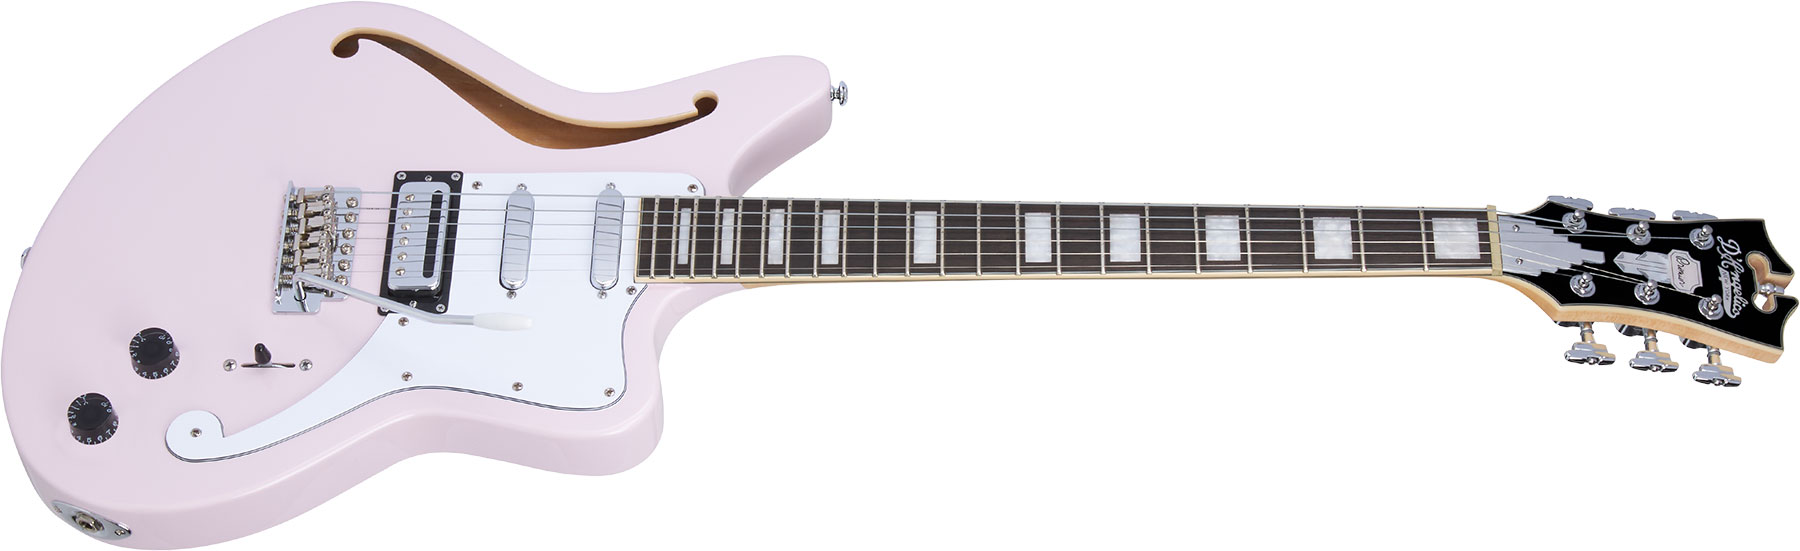 D'angelico Bedford Sh Premier Hss Trem Ova - Shell Pink - Semi hollow elektriche gitaar - Variation 1